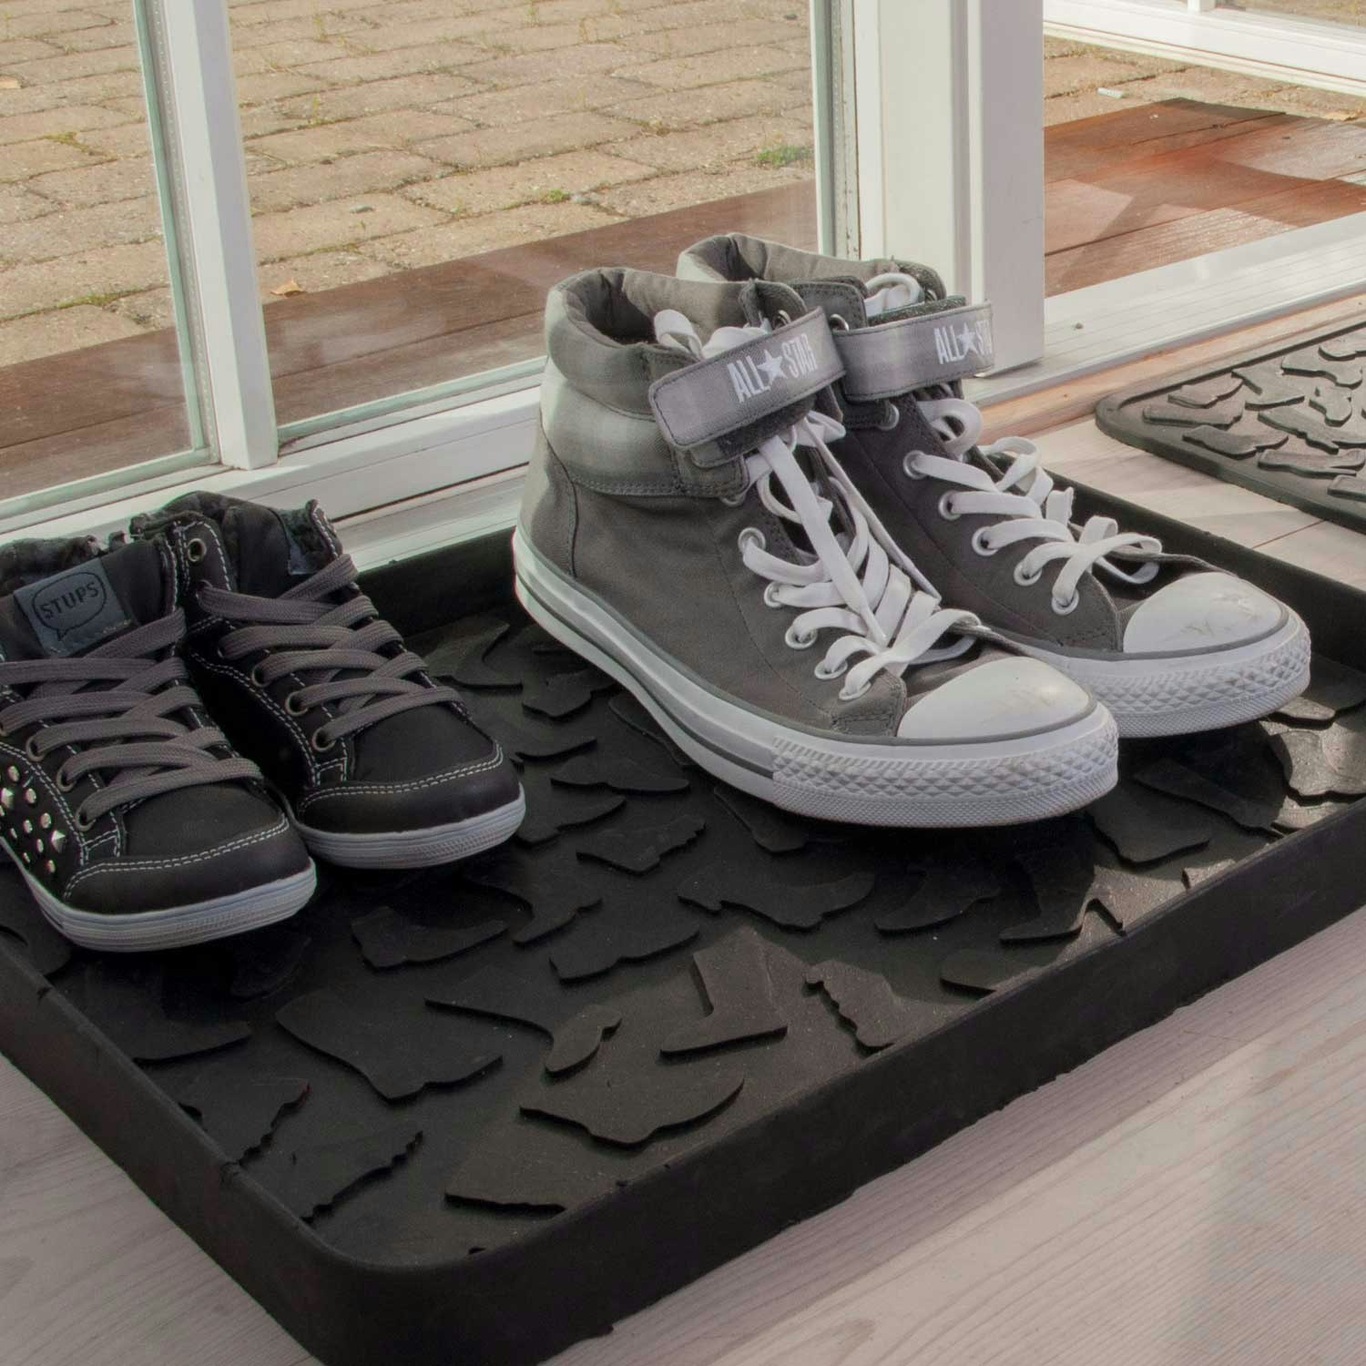 Housewares Inc - Boot Tray, Shoe Tray, Shoe Mat, Boot Mat, Mud Mat